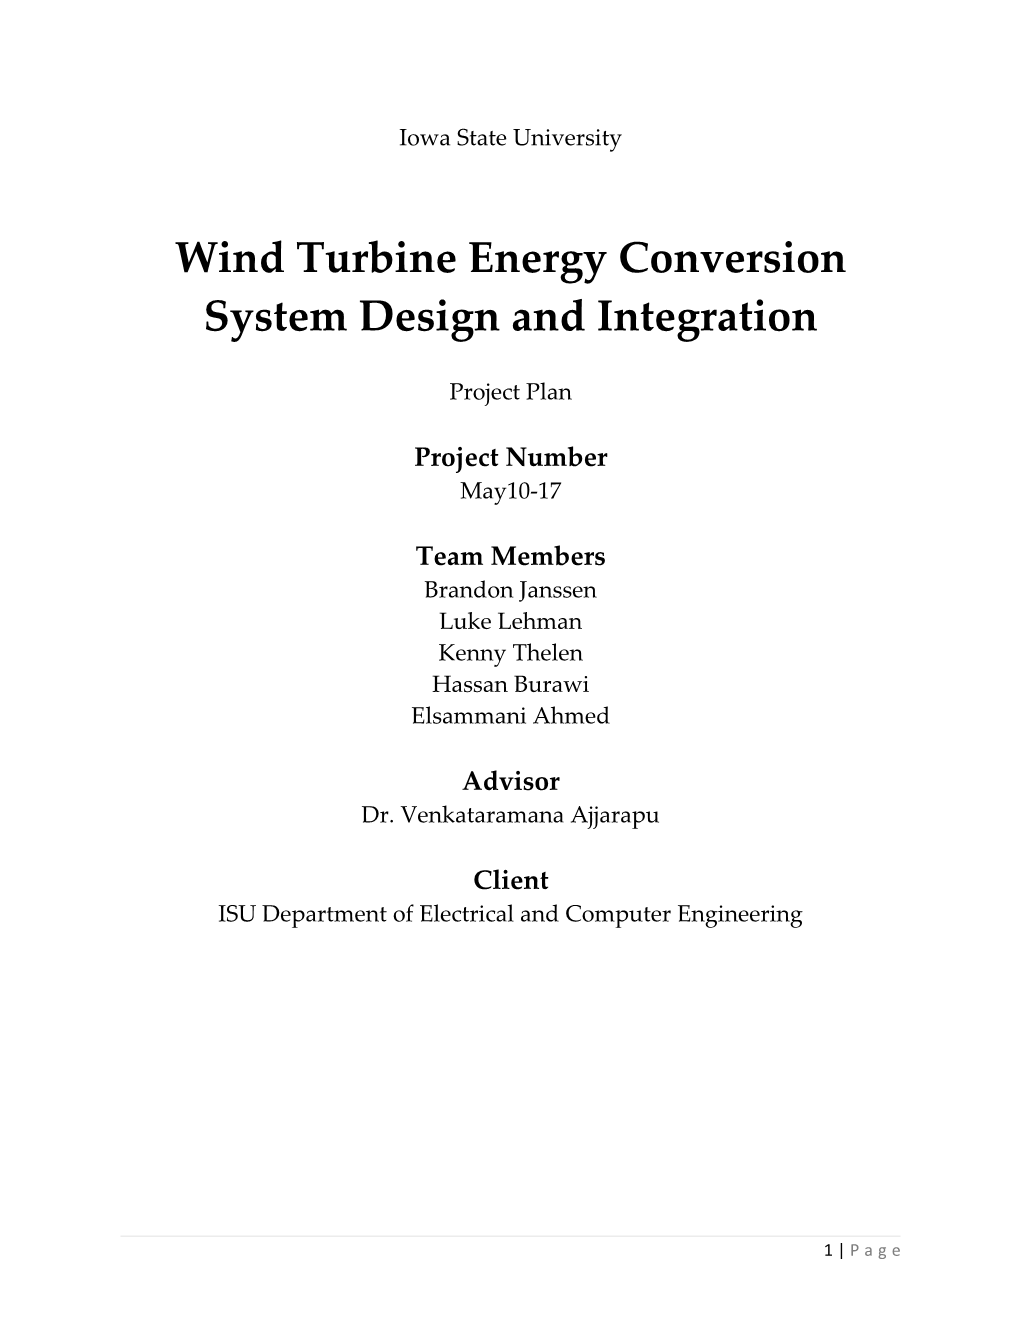 Wind Turbine Energy Conversion System Design and Integration